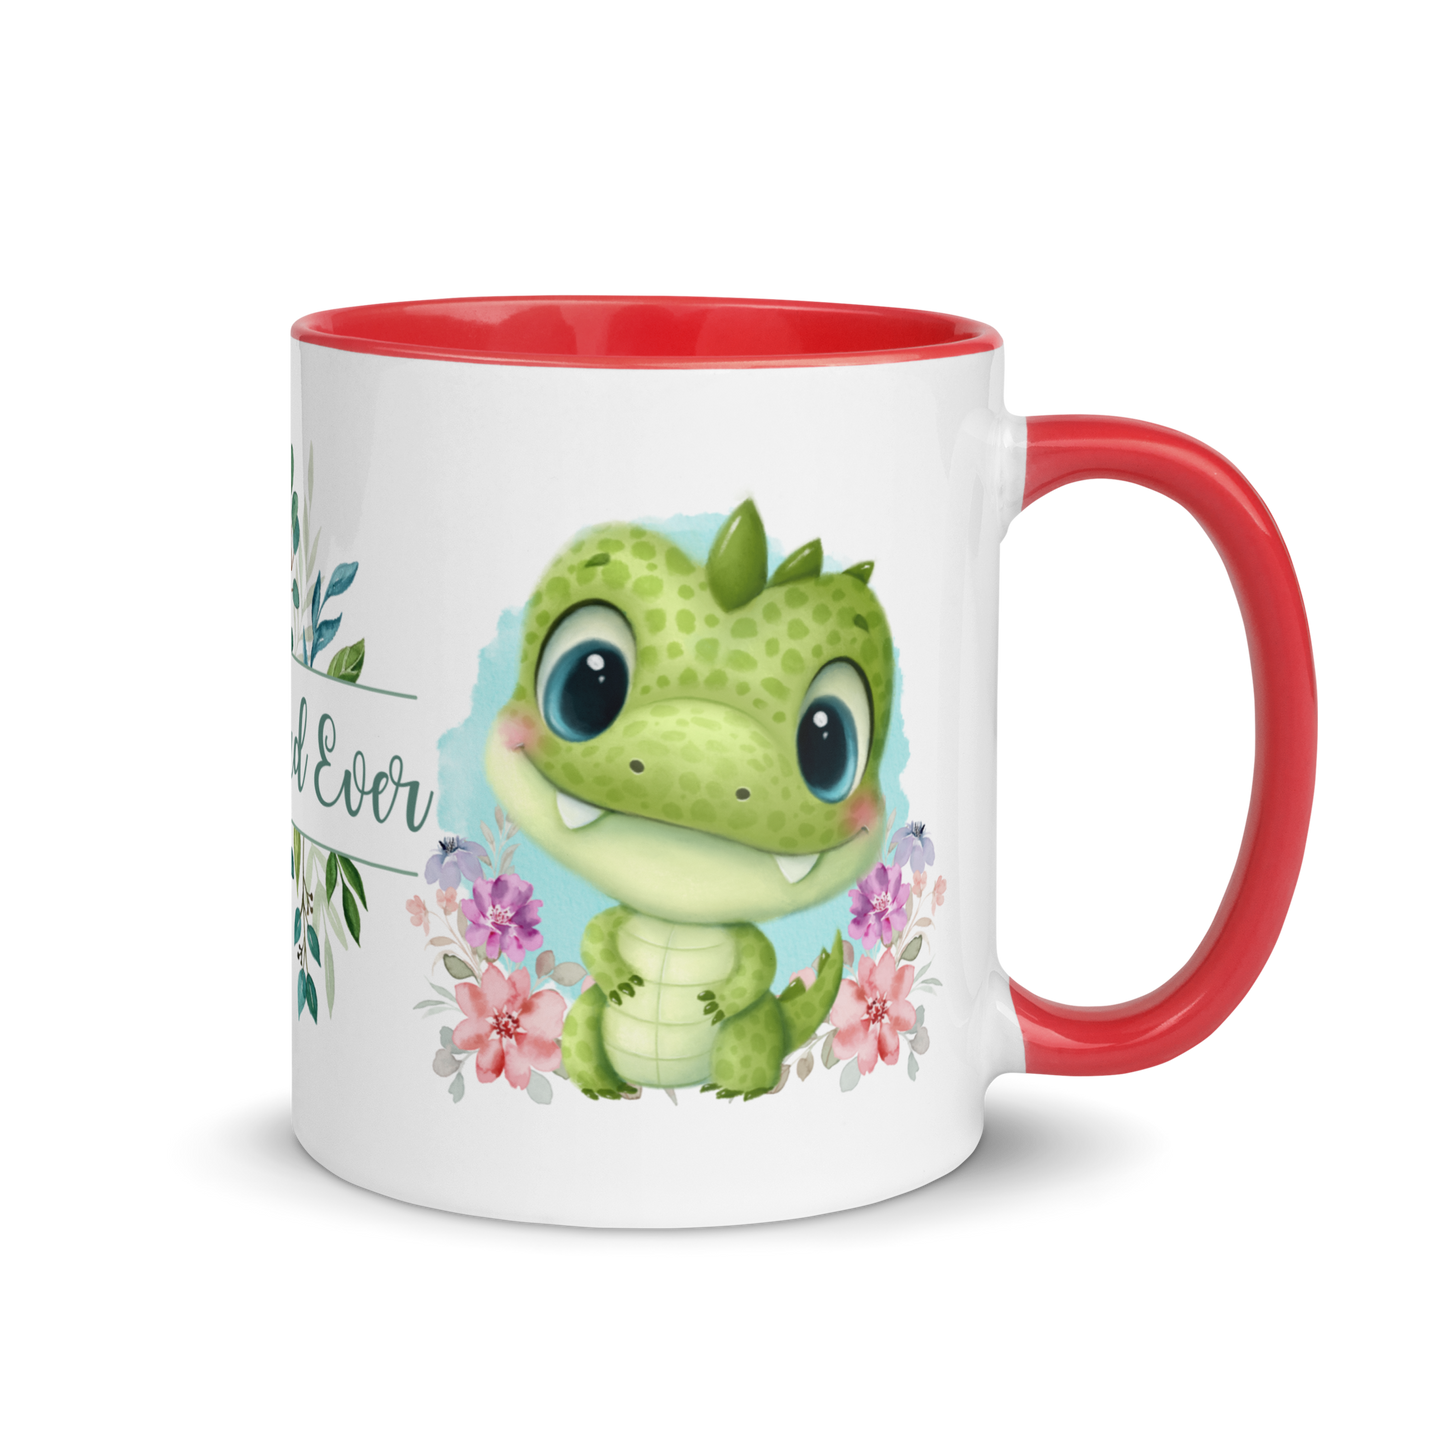 Accent Coffee Mug 11oz | Cute Green Dinosaur Floral Best Dad Ever